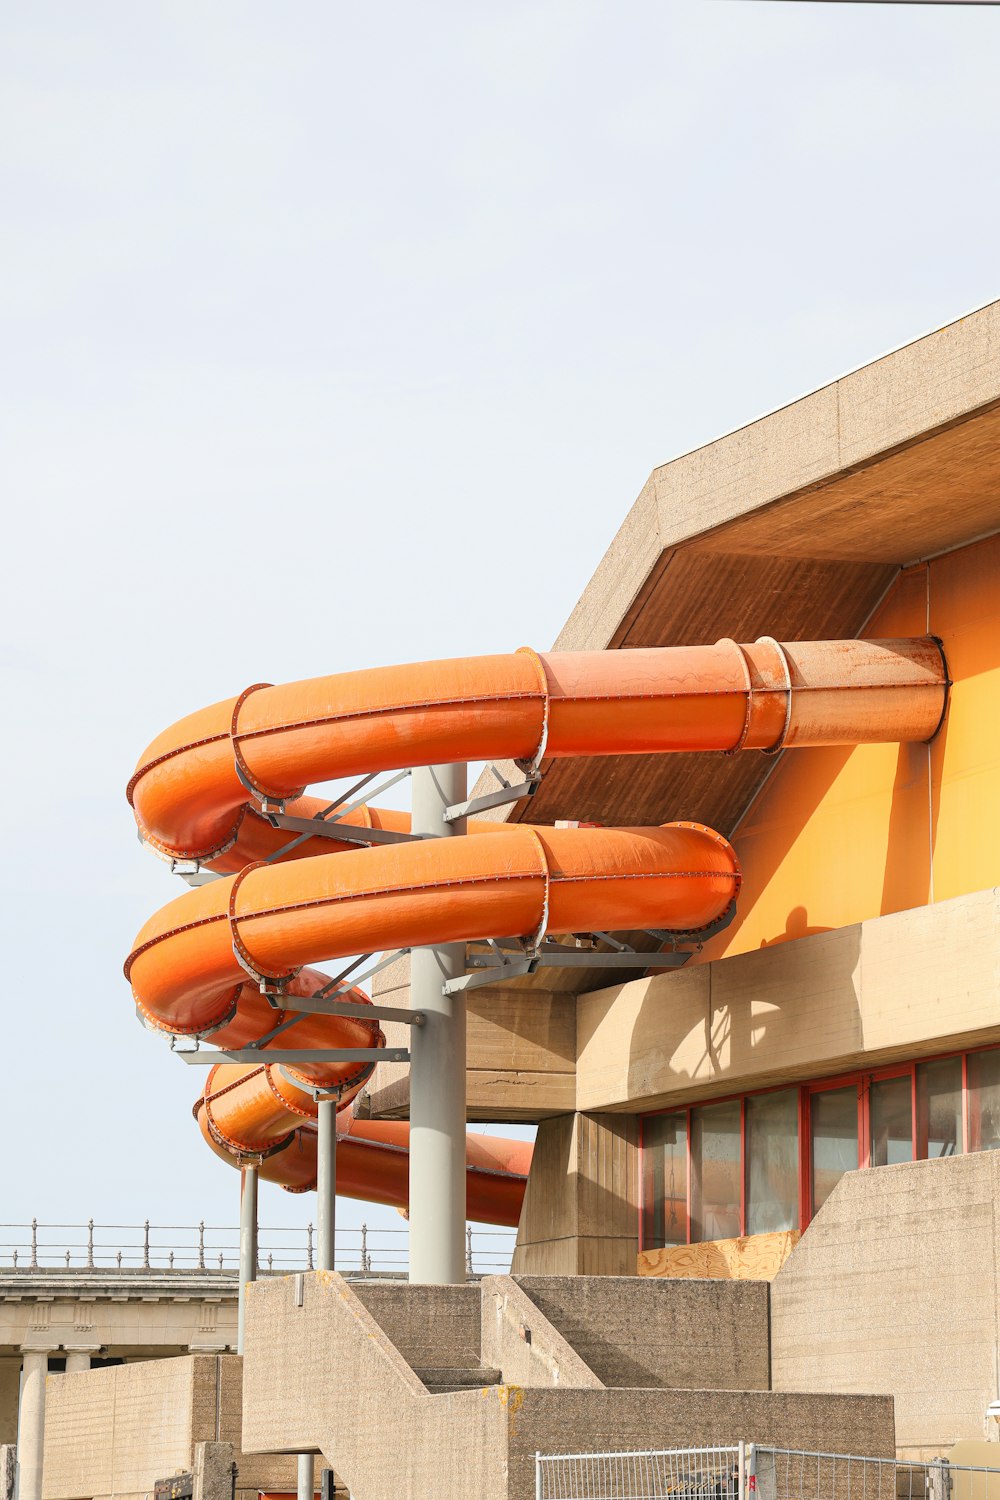 Une rangée de toboggans aquatiques orange devant un bâtiment